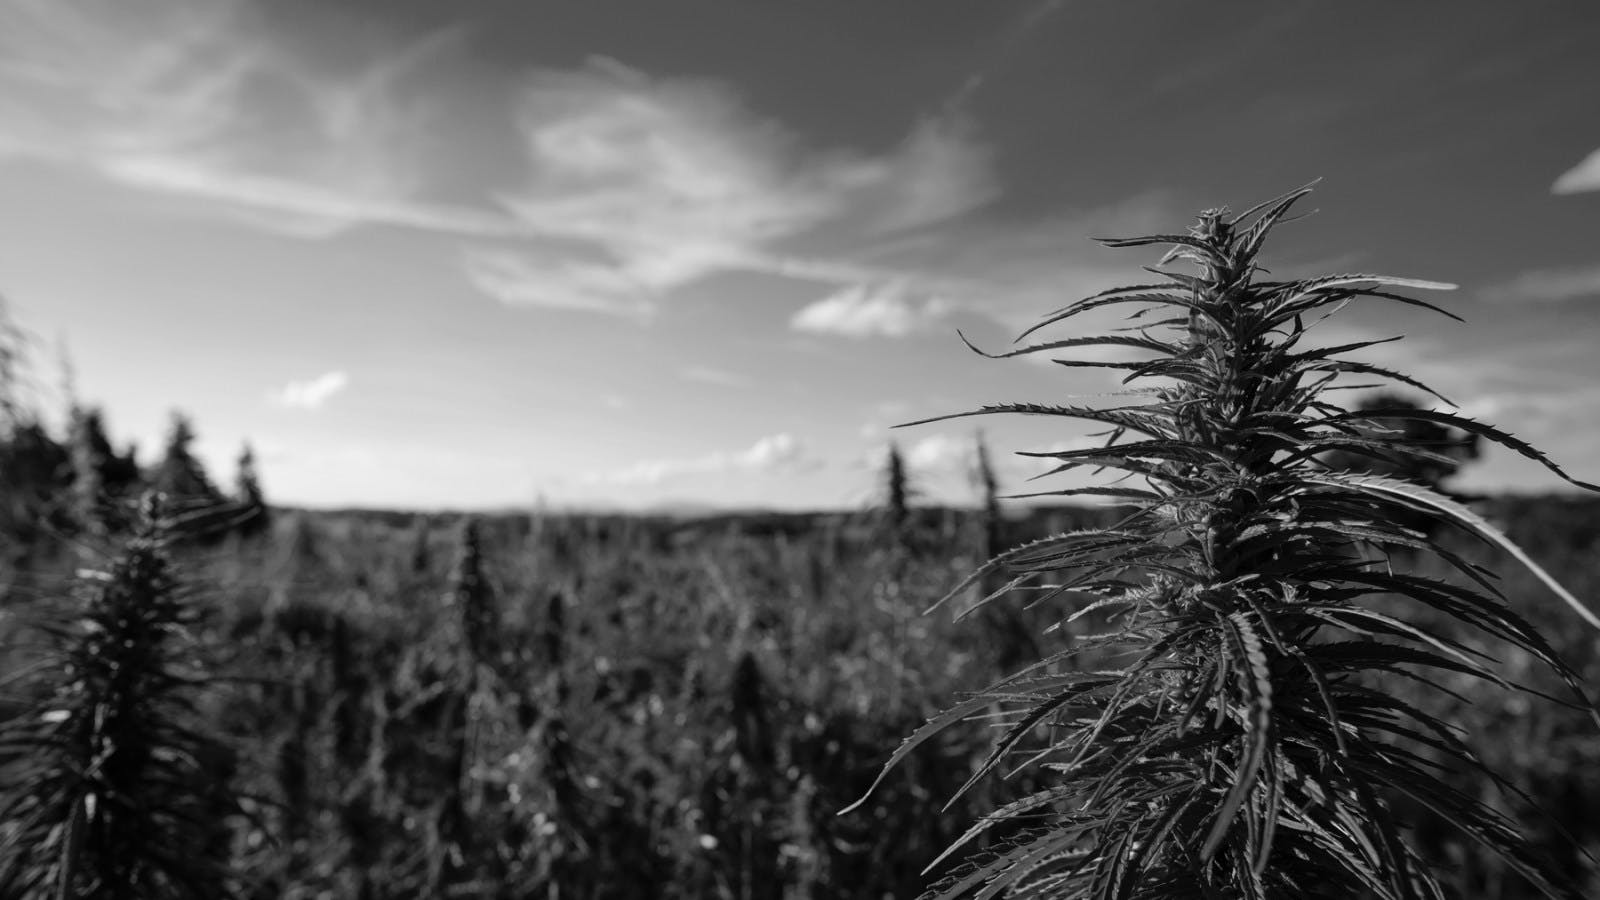 Michael Steinmetz: How Do We Grow Cannabis Responsibly?